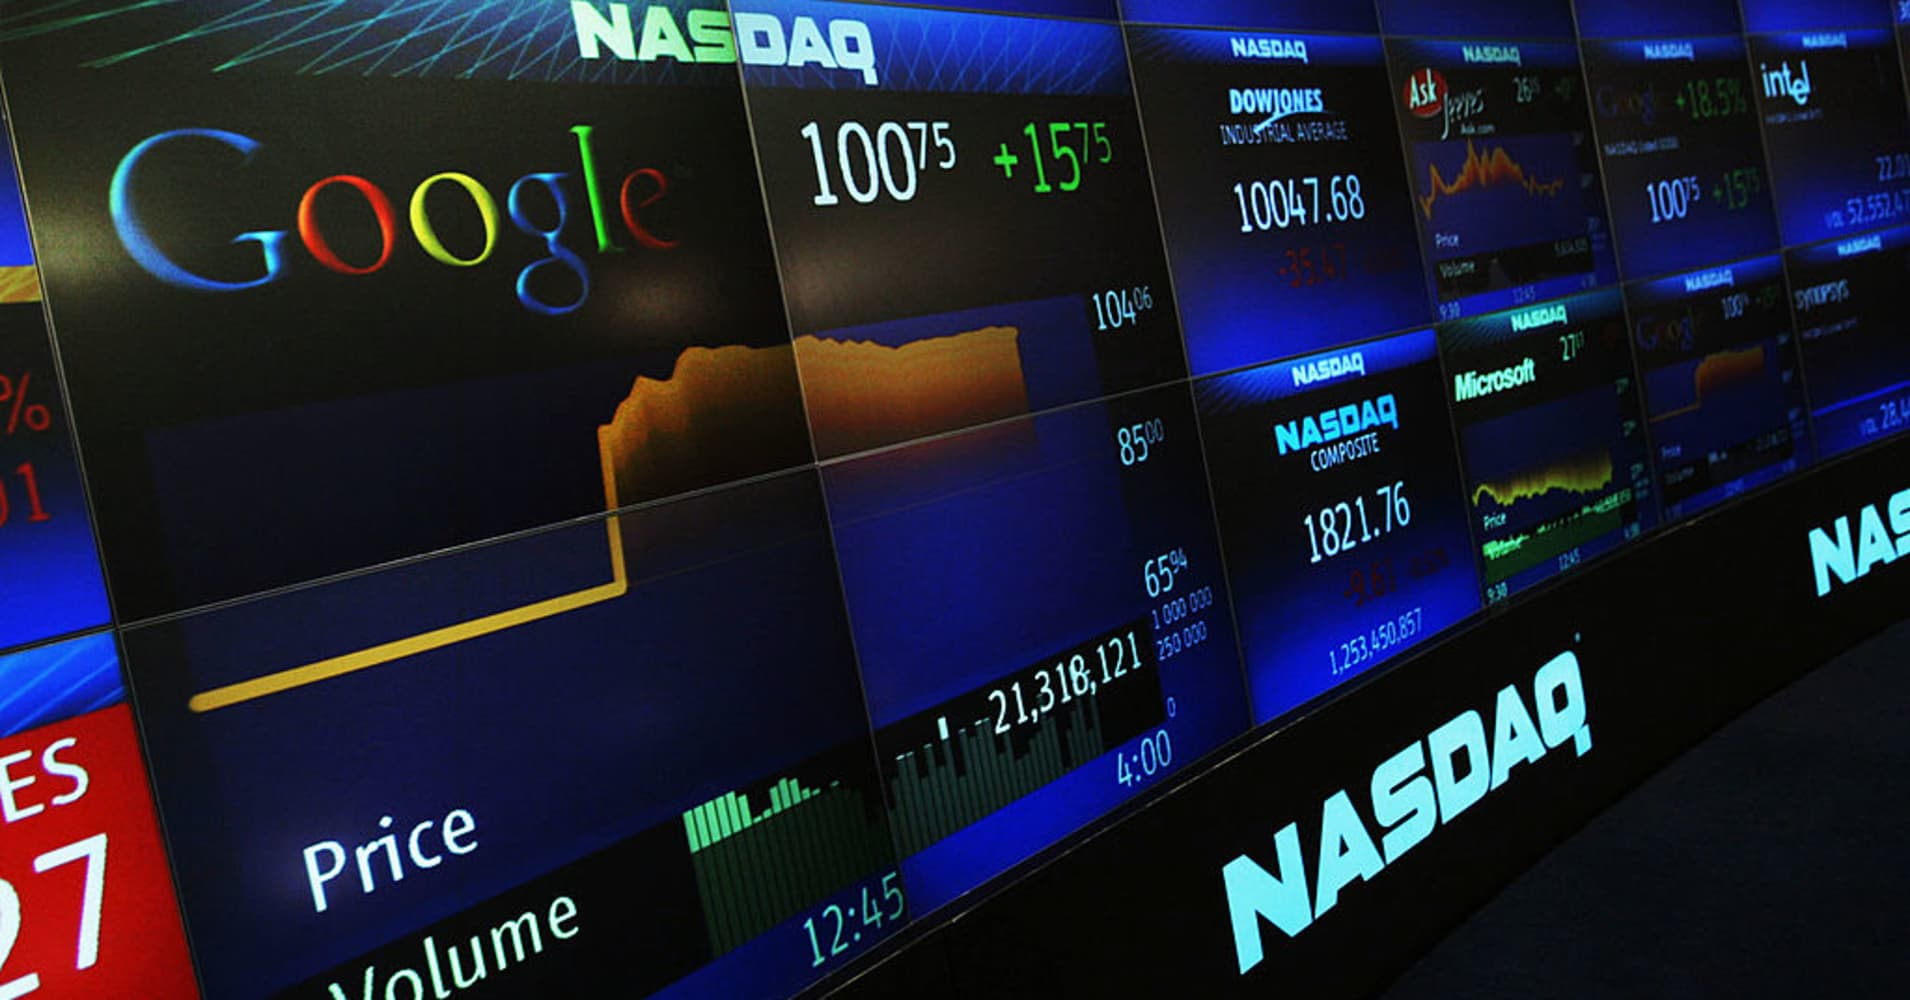 Data glitch Google, Yahoo display incorrect stock market prices